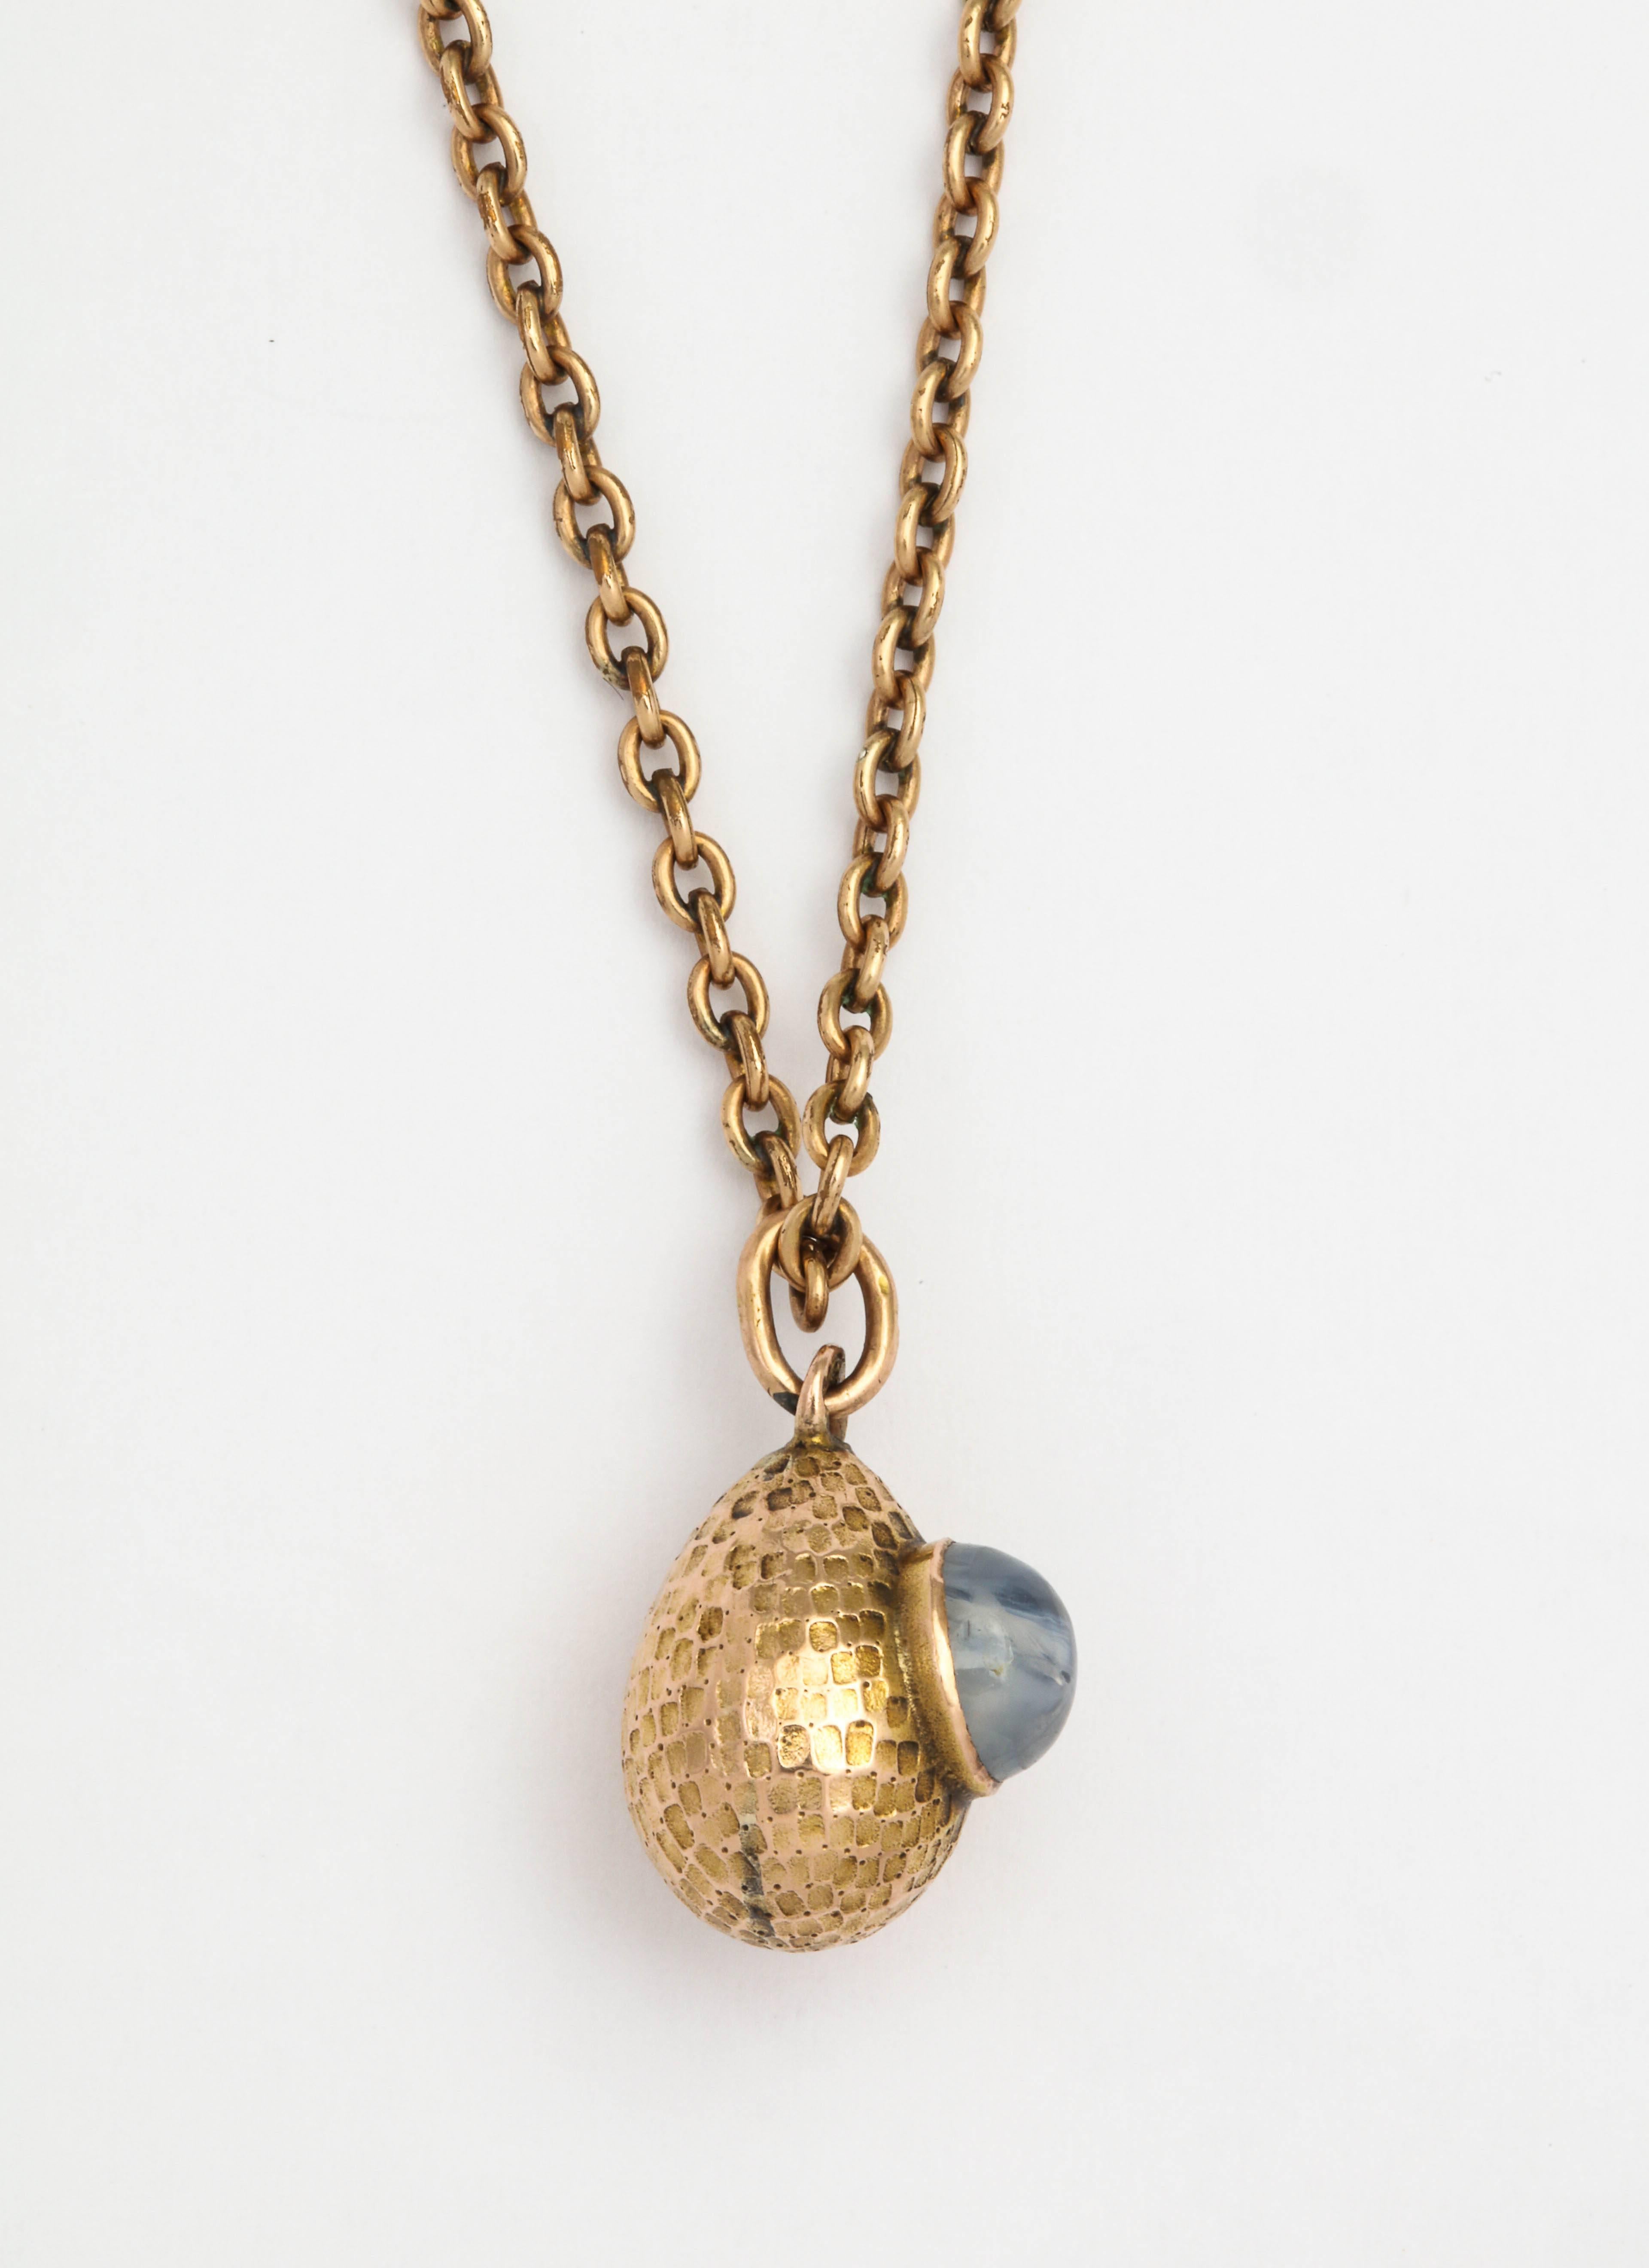 Women's or Men's Rare Russian Textured Gold and Star Sapphire Egg Pendant, circa 1900